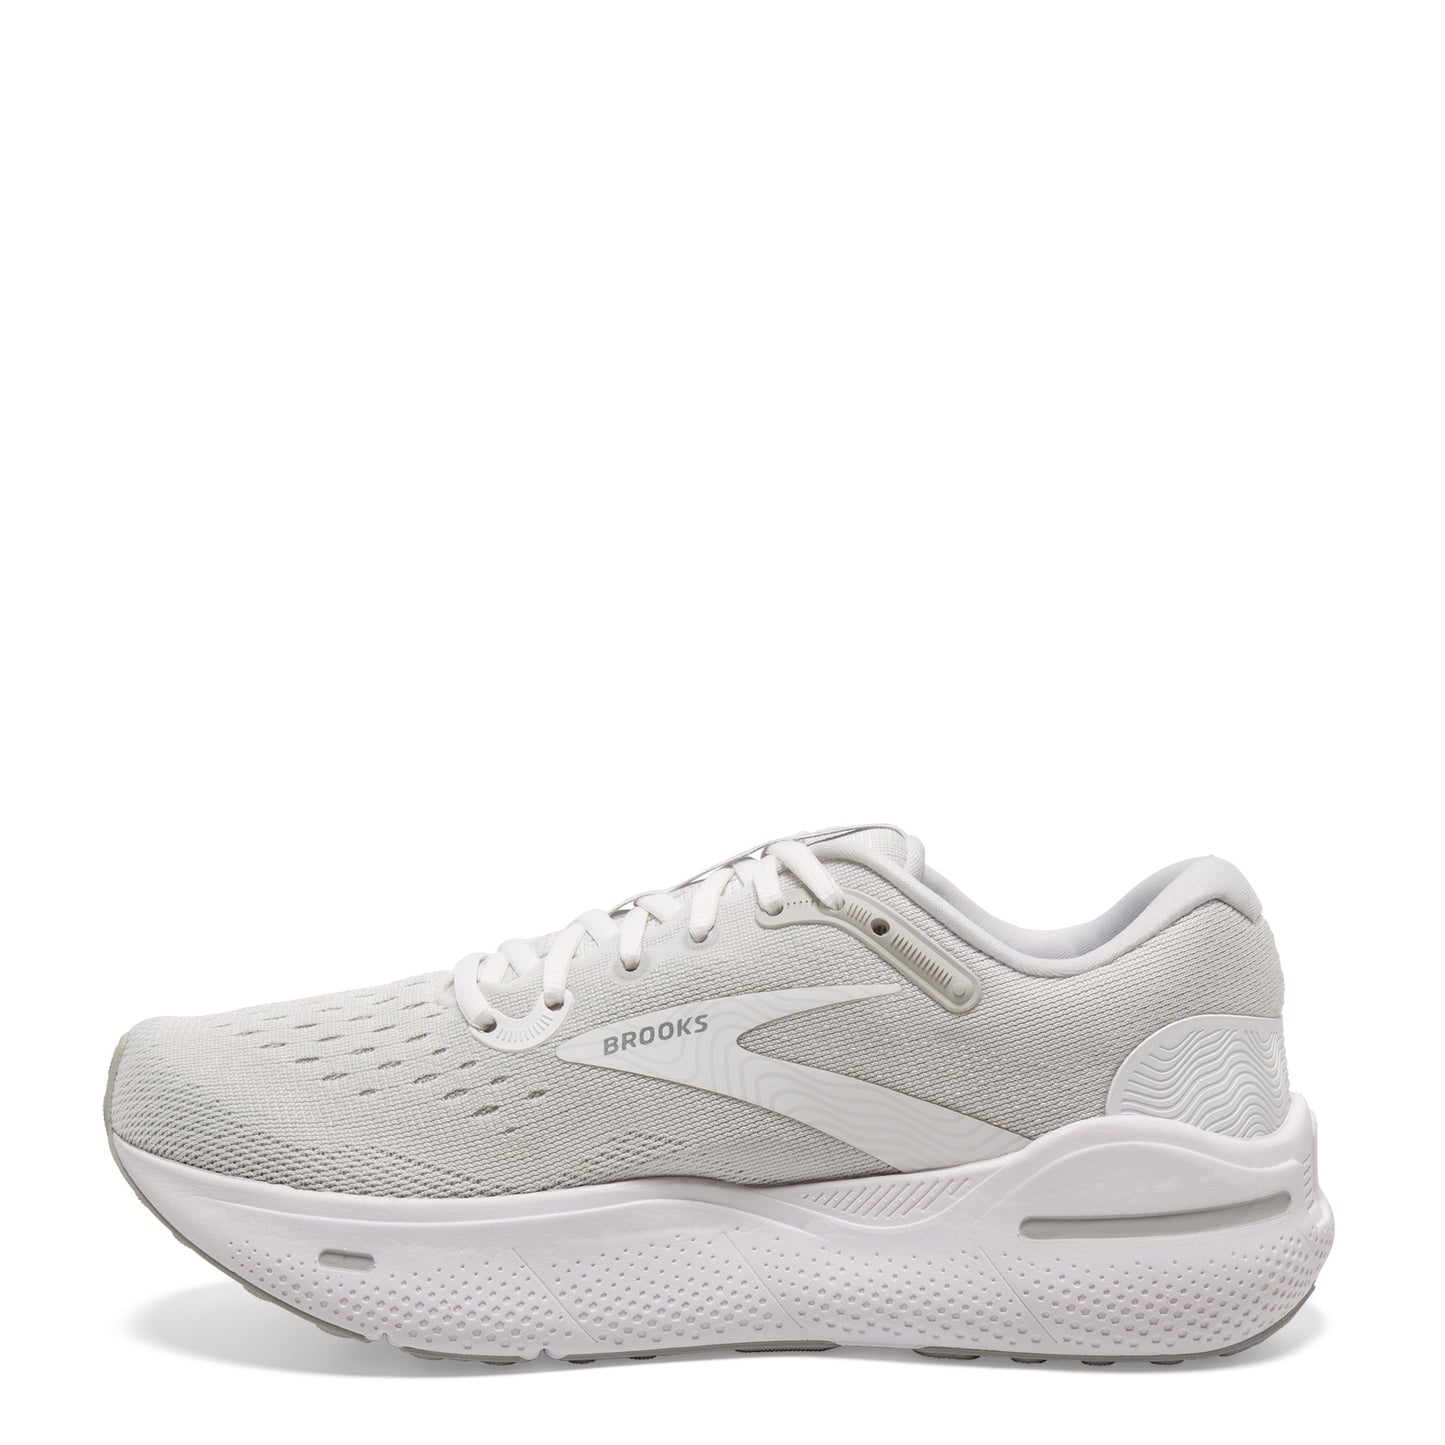 Peltz Shoes  Women's Brooks Ghost Max Running Shoe - Wide Width White/Oyster/Metallic Silver 120395 1D 124